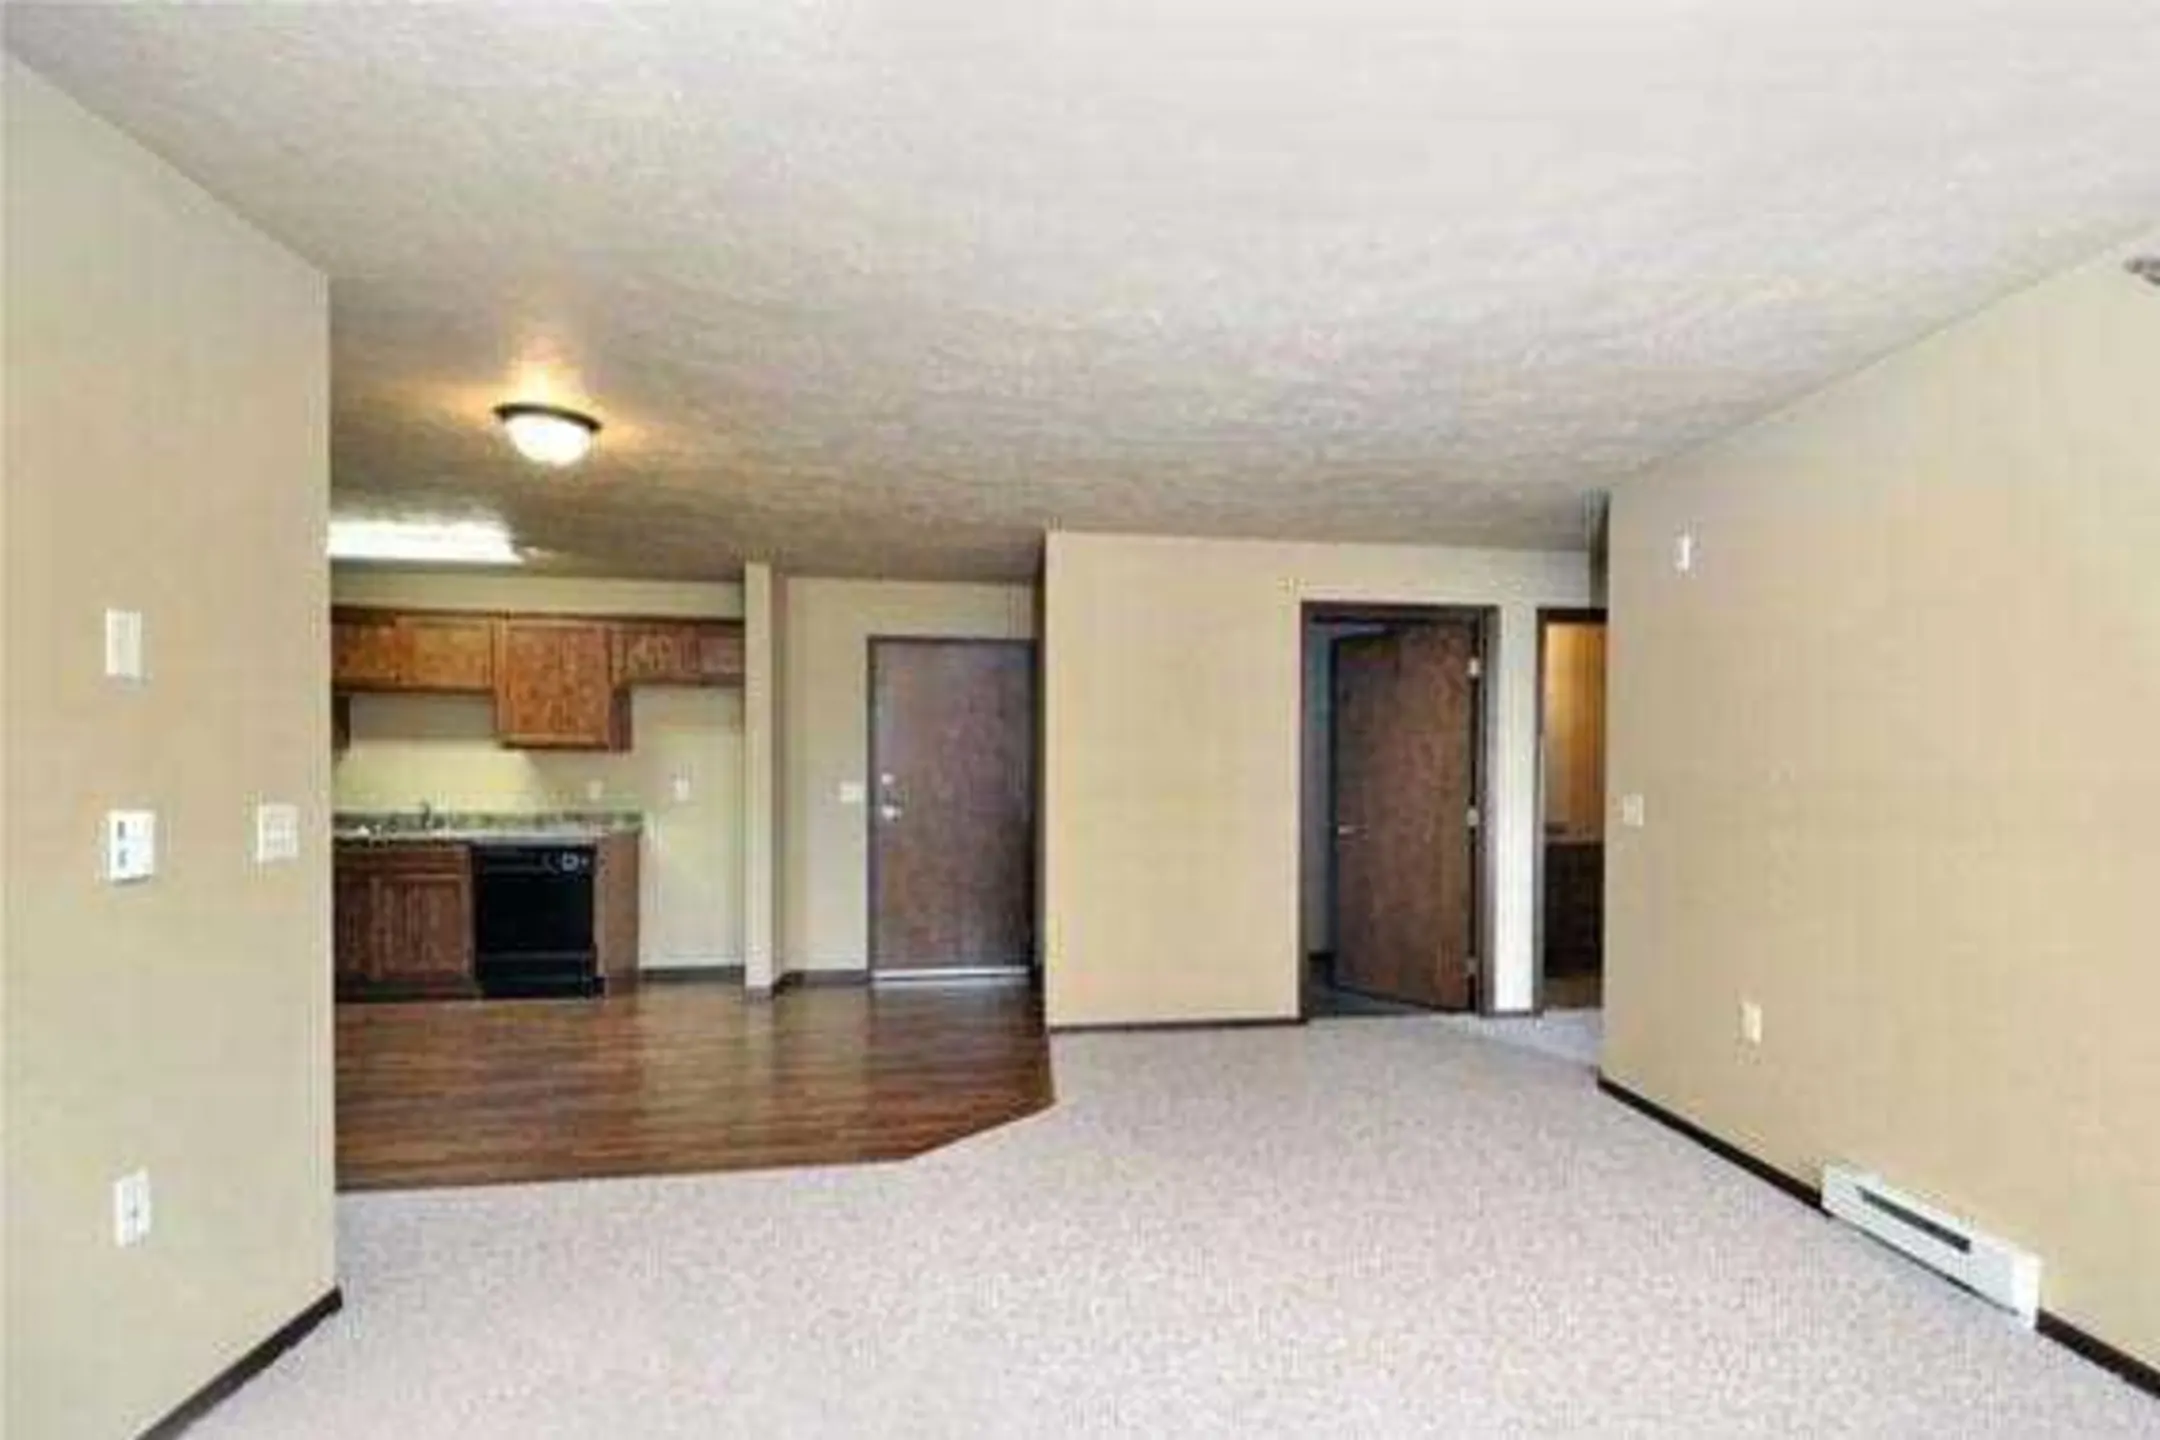 Mirada Manor Apartments - Sioux Falls, SD